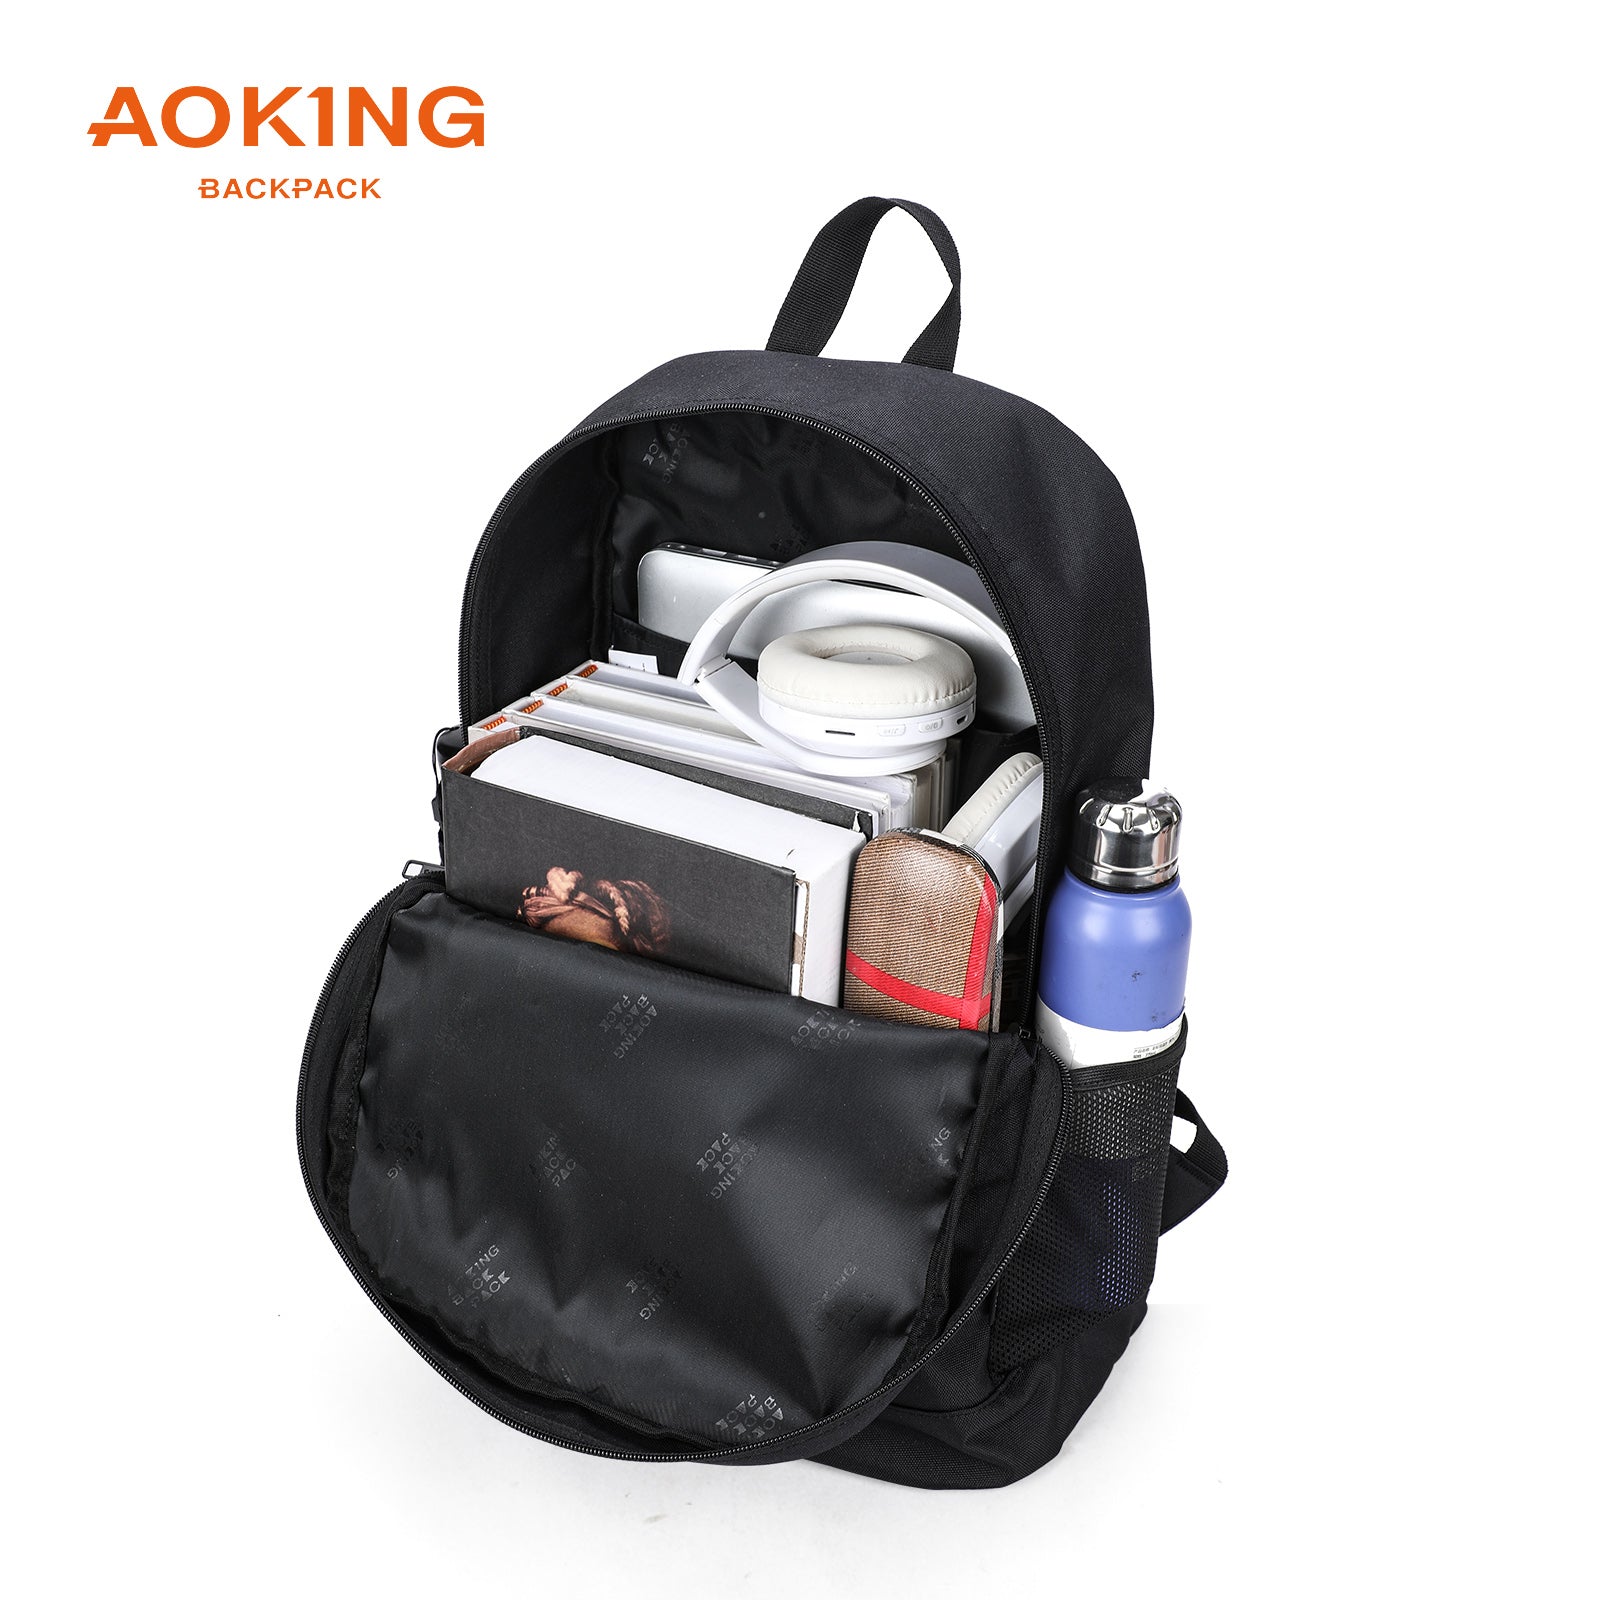 Aoking Lightweight Casual Sport Outdoor Backpack XN3501